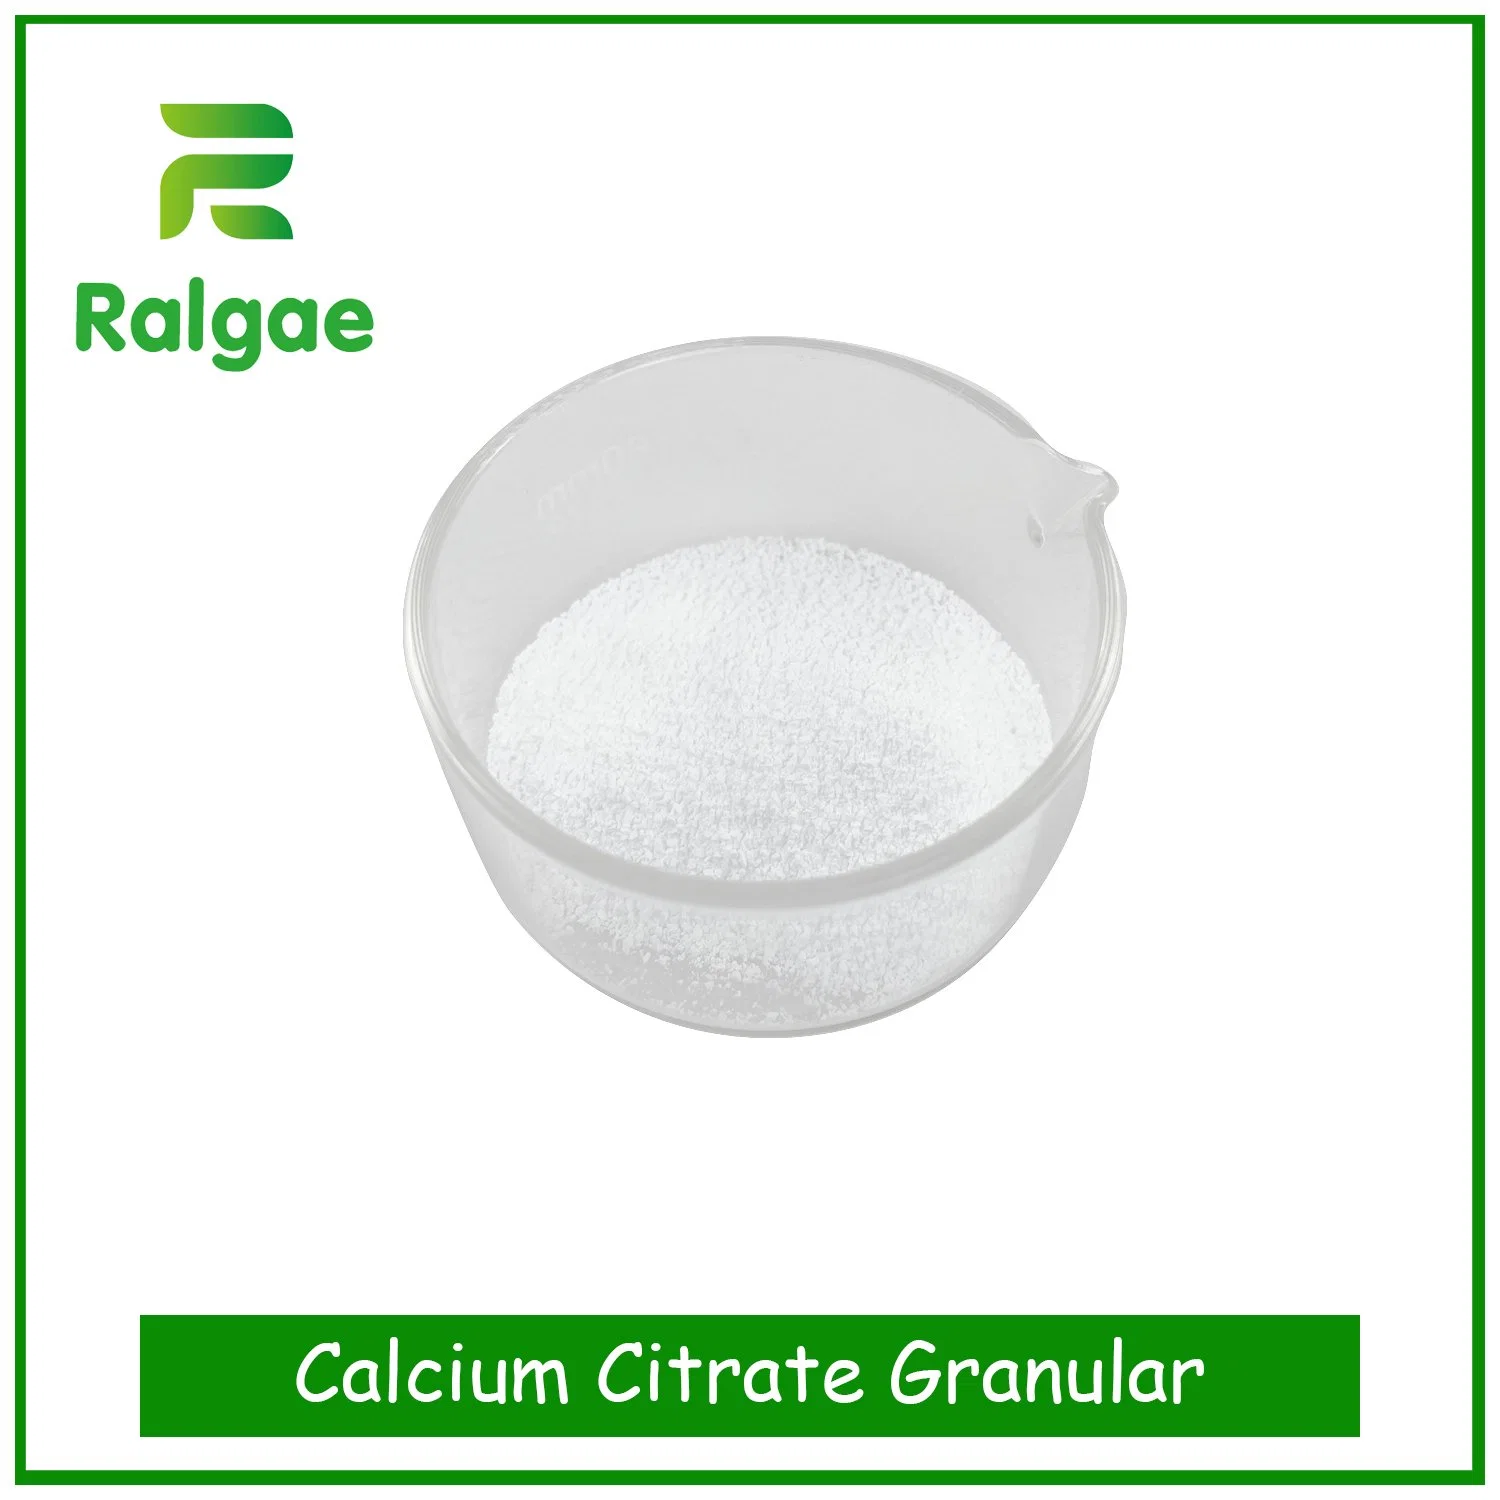 Calcium Citrate Granular Tetrahydrate CAS: CAS: 5785-44-4